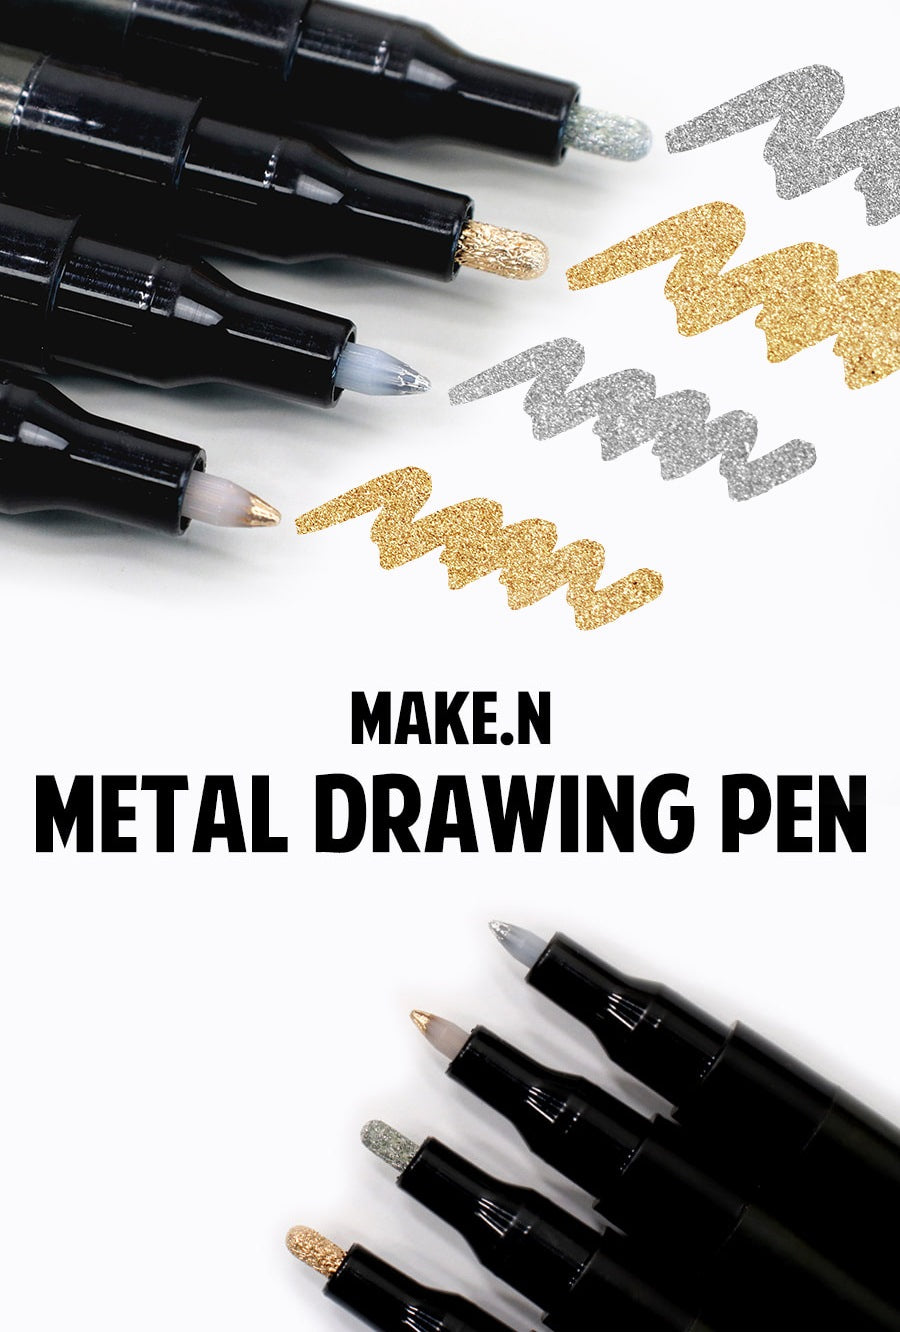 Make.N Metal Drawing Pen